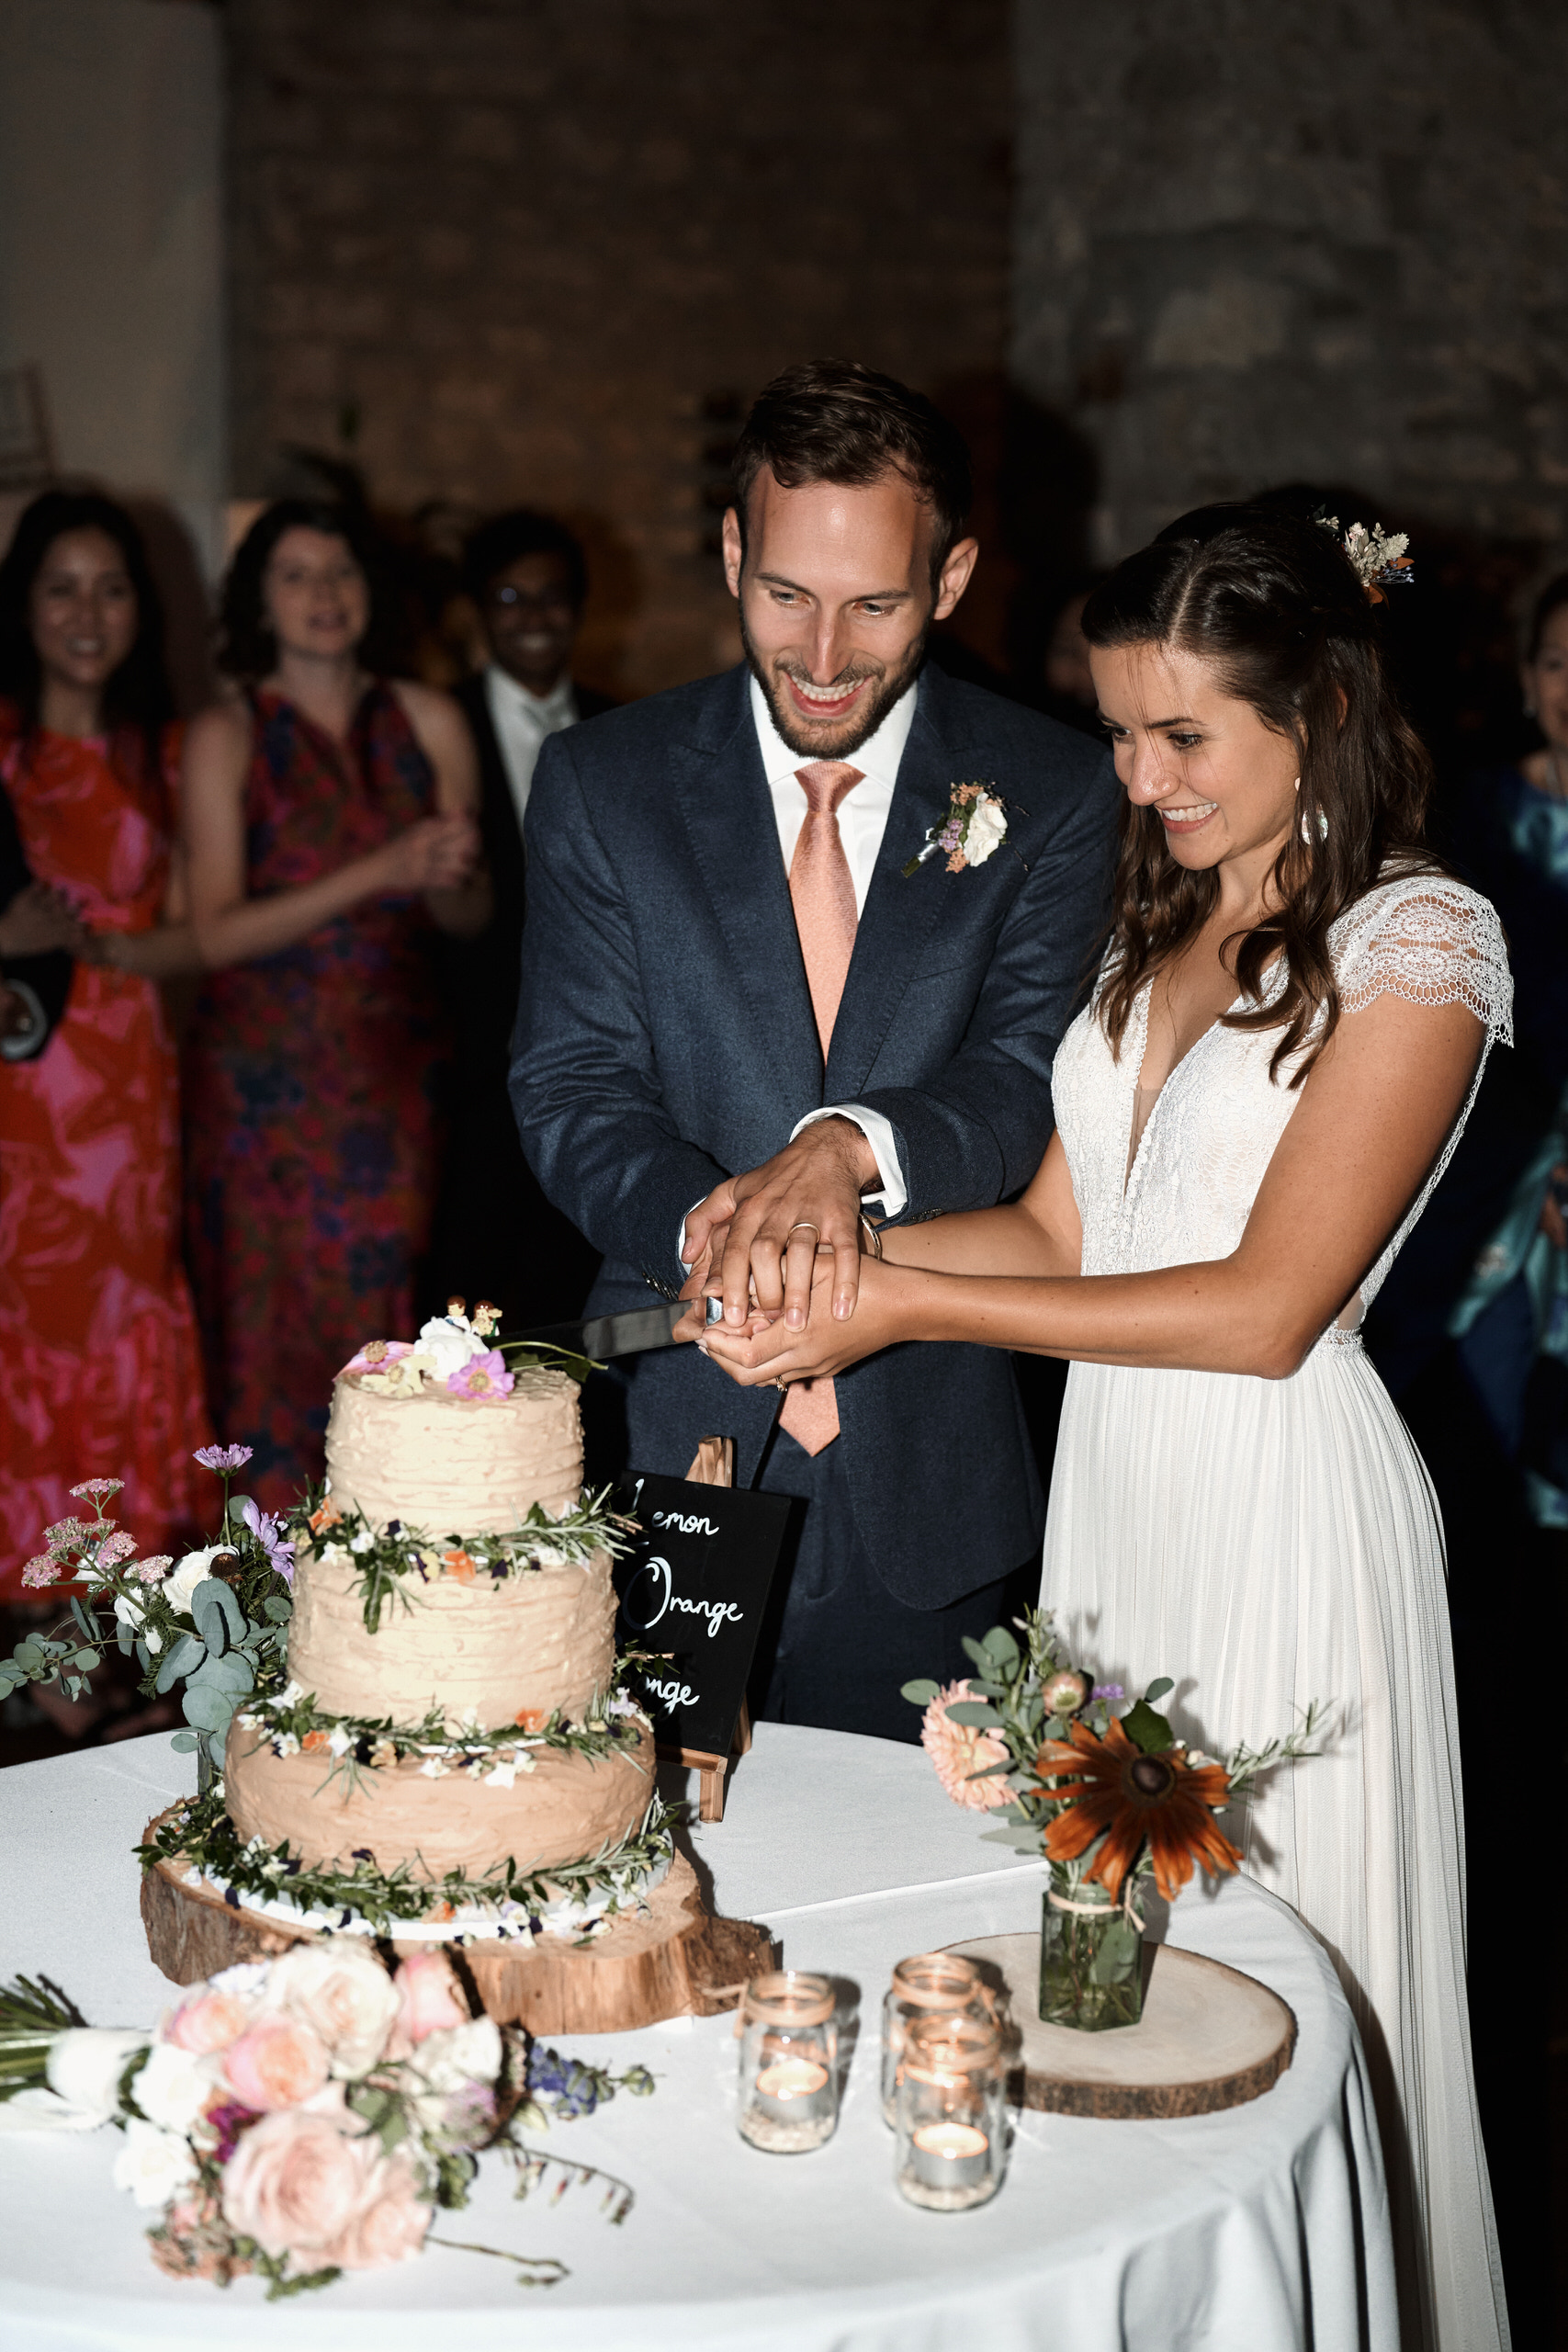 A couple slicing their wedding cake.